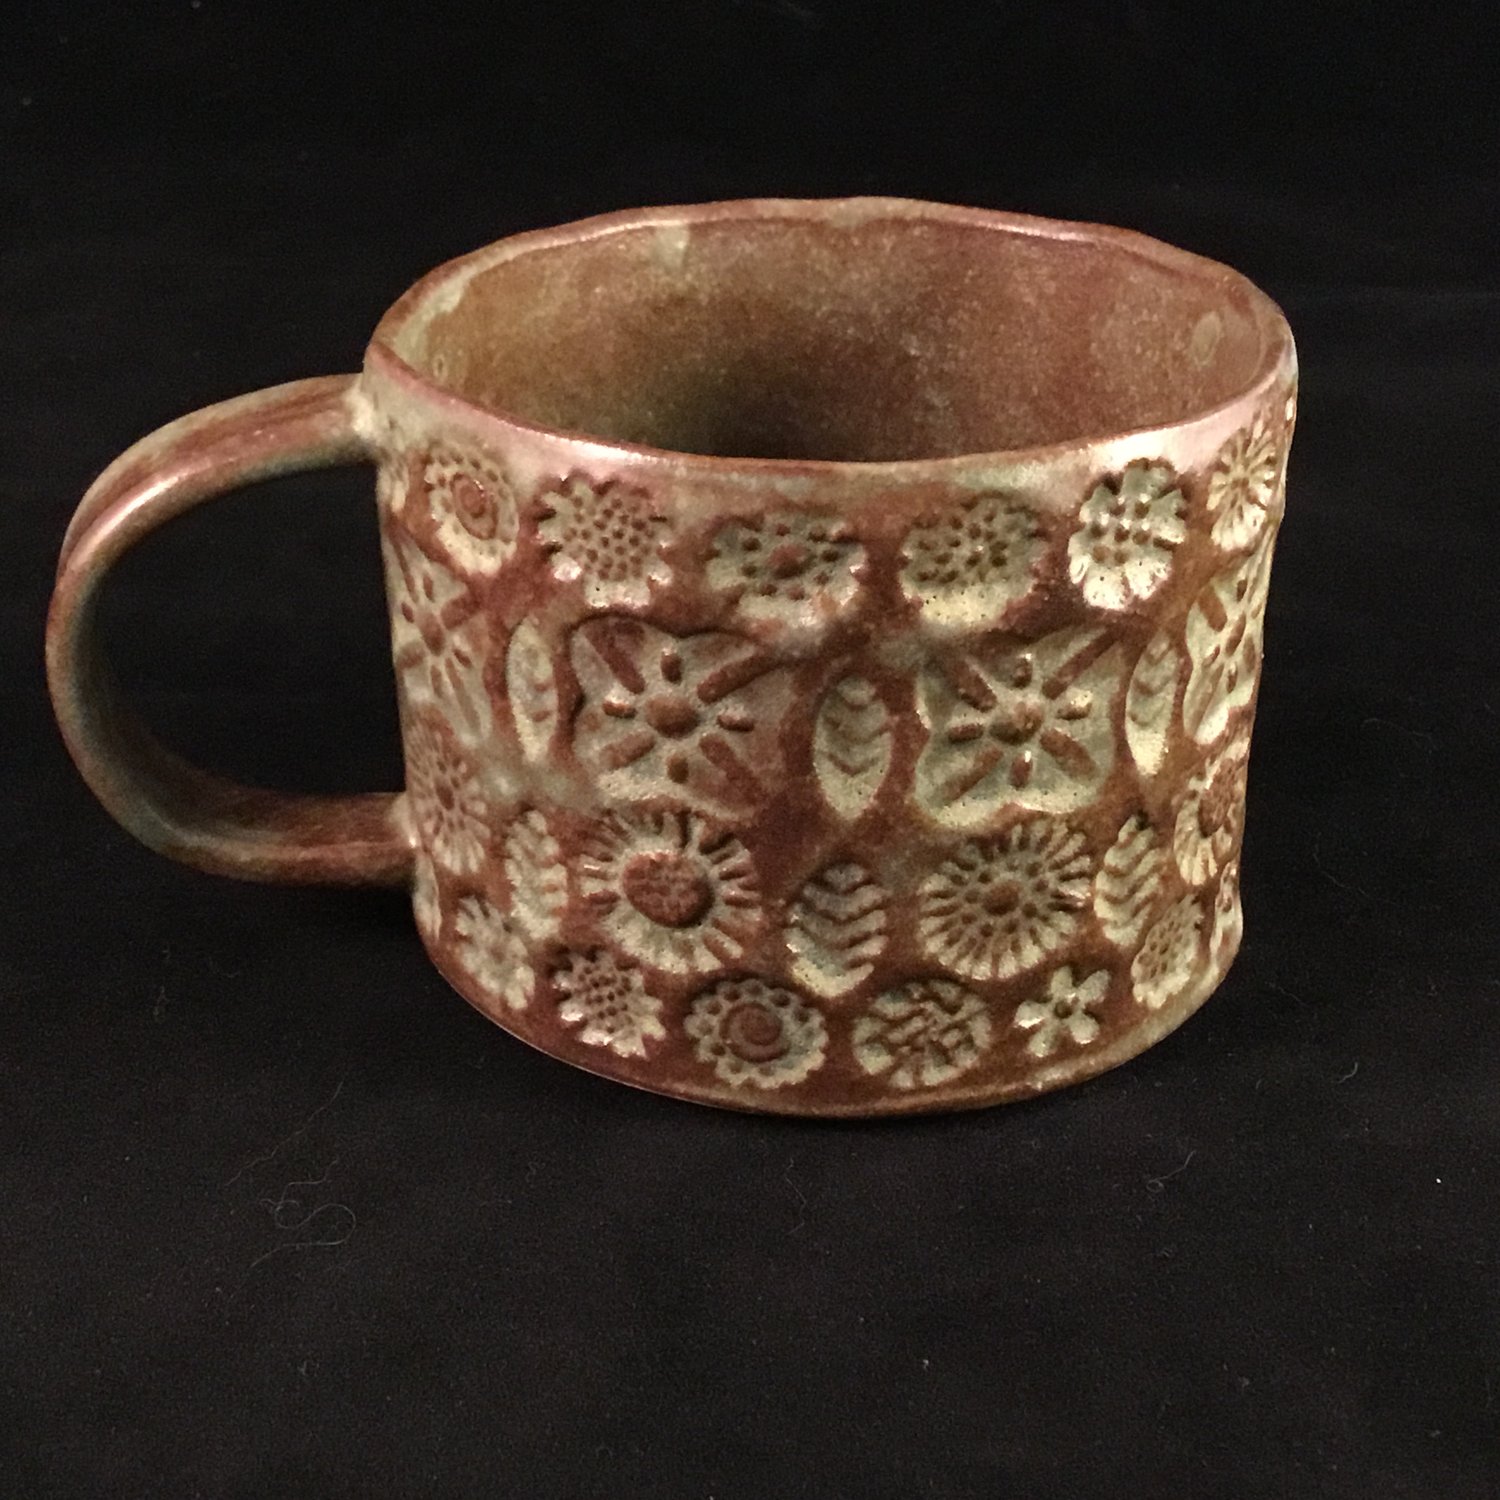 Image of Garden mug